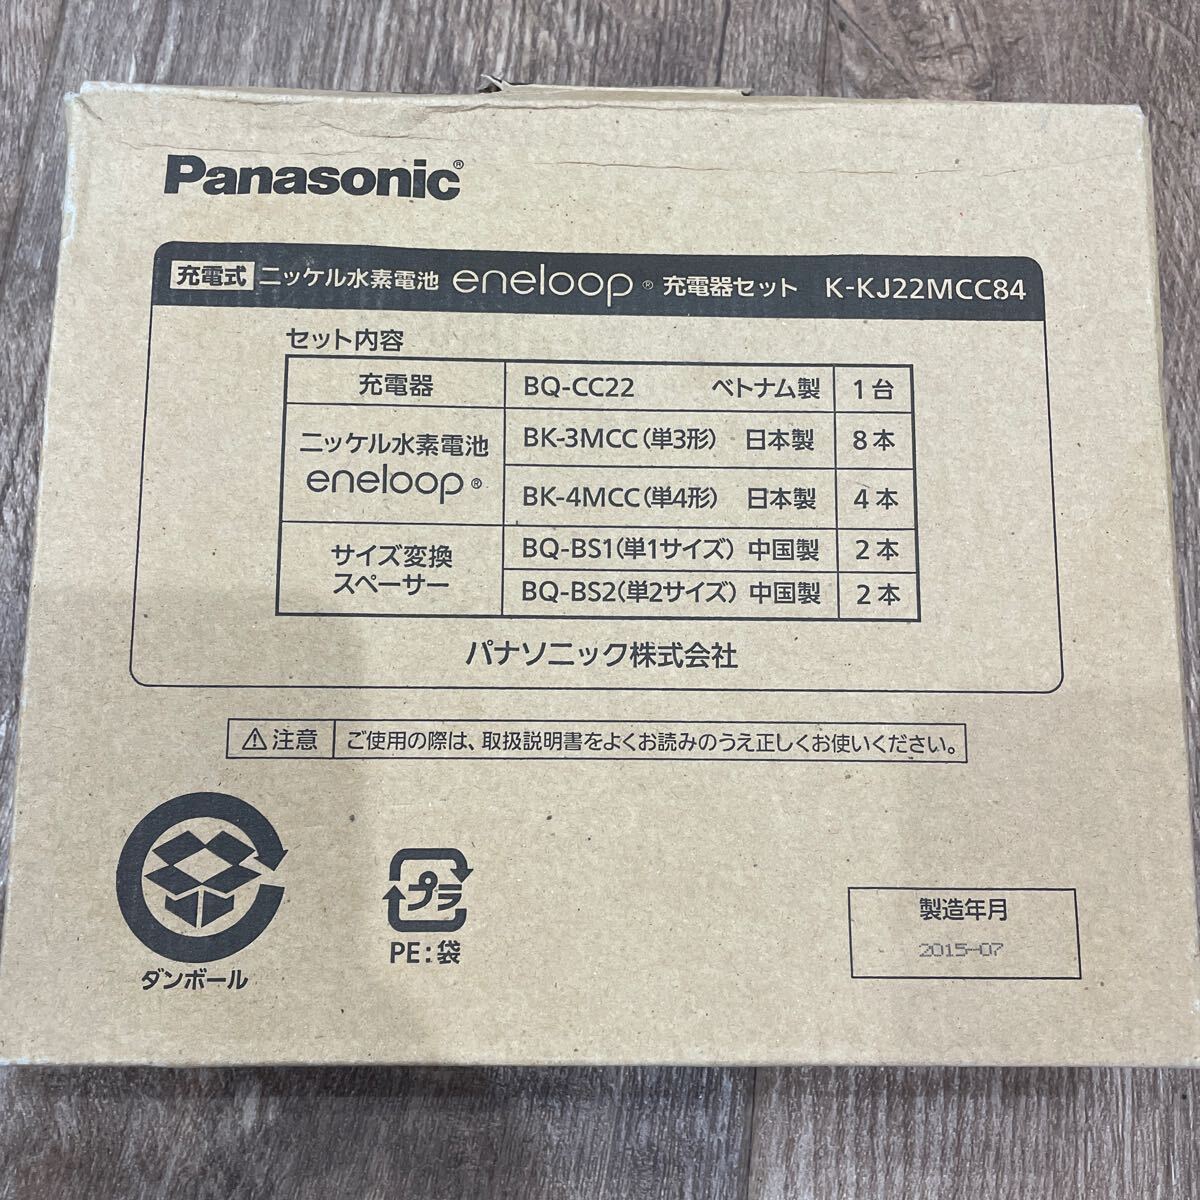  new goods unused in box Panasonic Panasonic Eneloop charger set K-KJ22MCC84 eneloop Nickel-Metal Hydride battery rechargeable battery spacer operation verification settled 